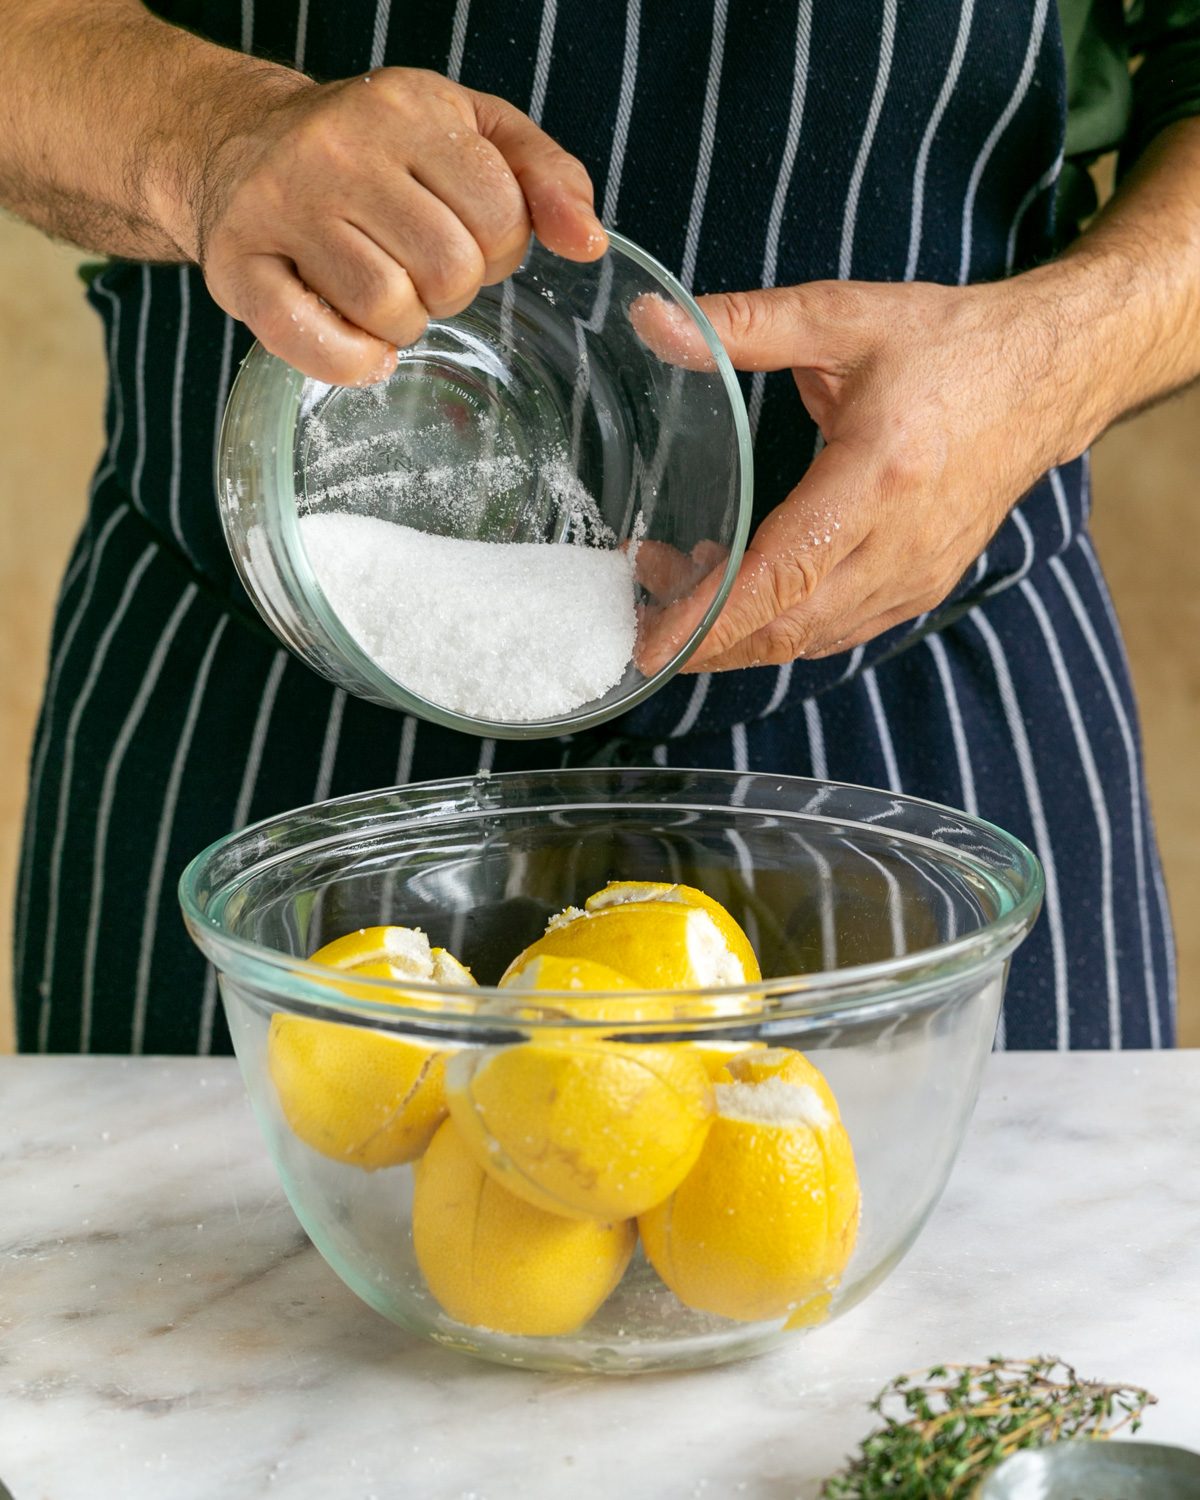 Salt and sugar mixture for lemons